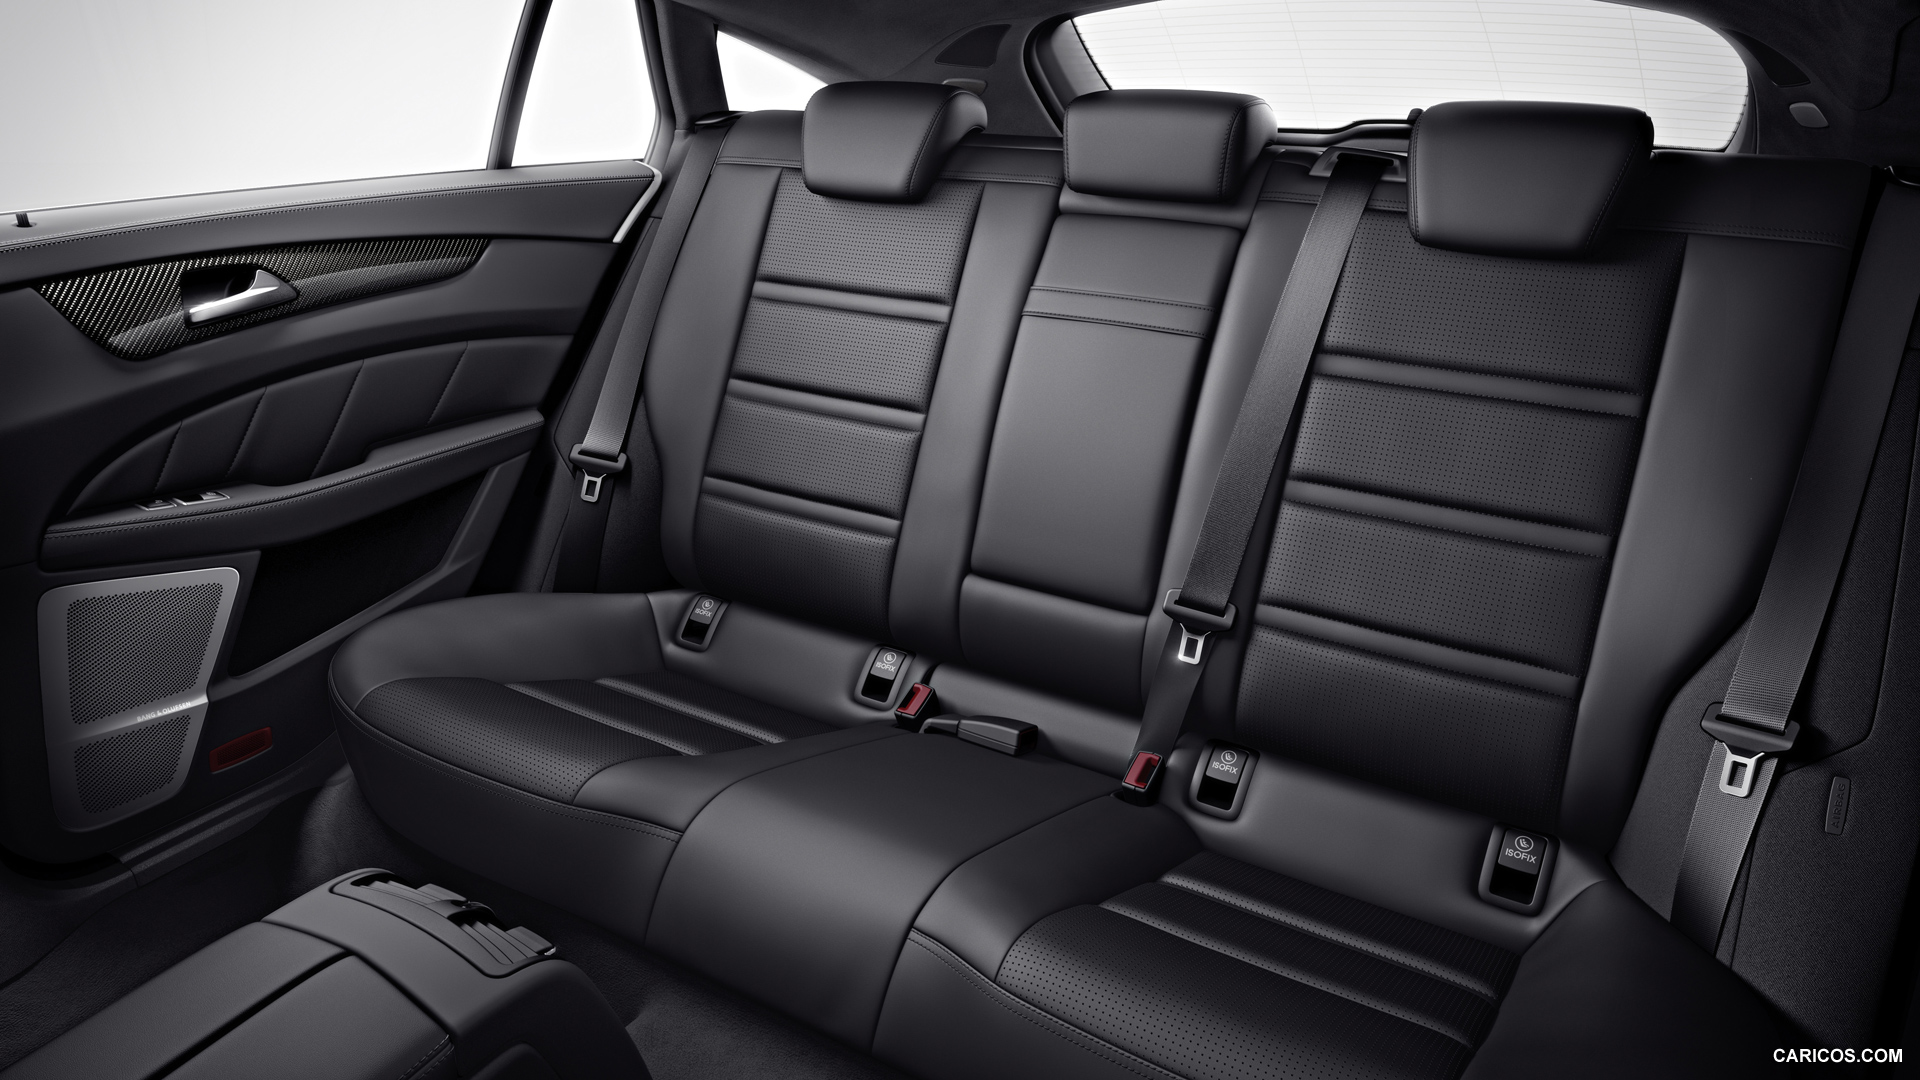 2014 Mercedes-Benz CLS 63 AMG Shooting Brake S-Model - Interior Rear Seats, #16 of 16